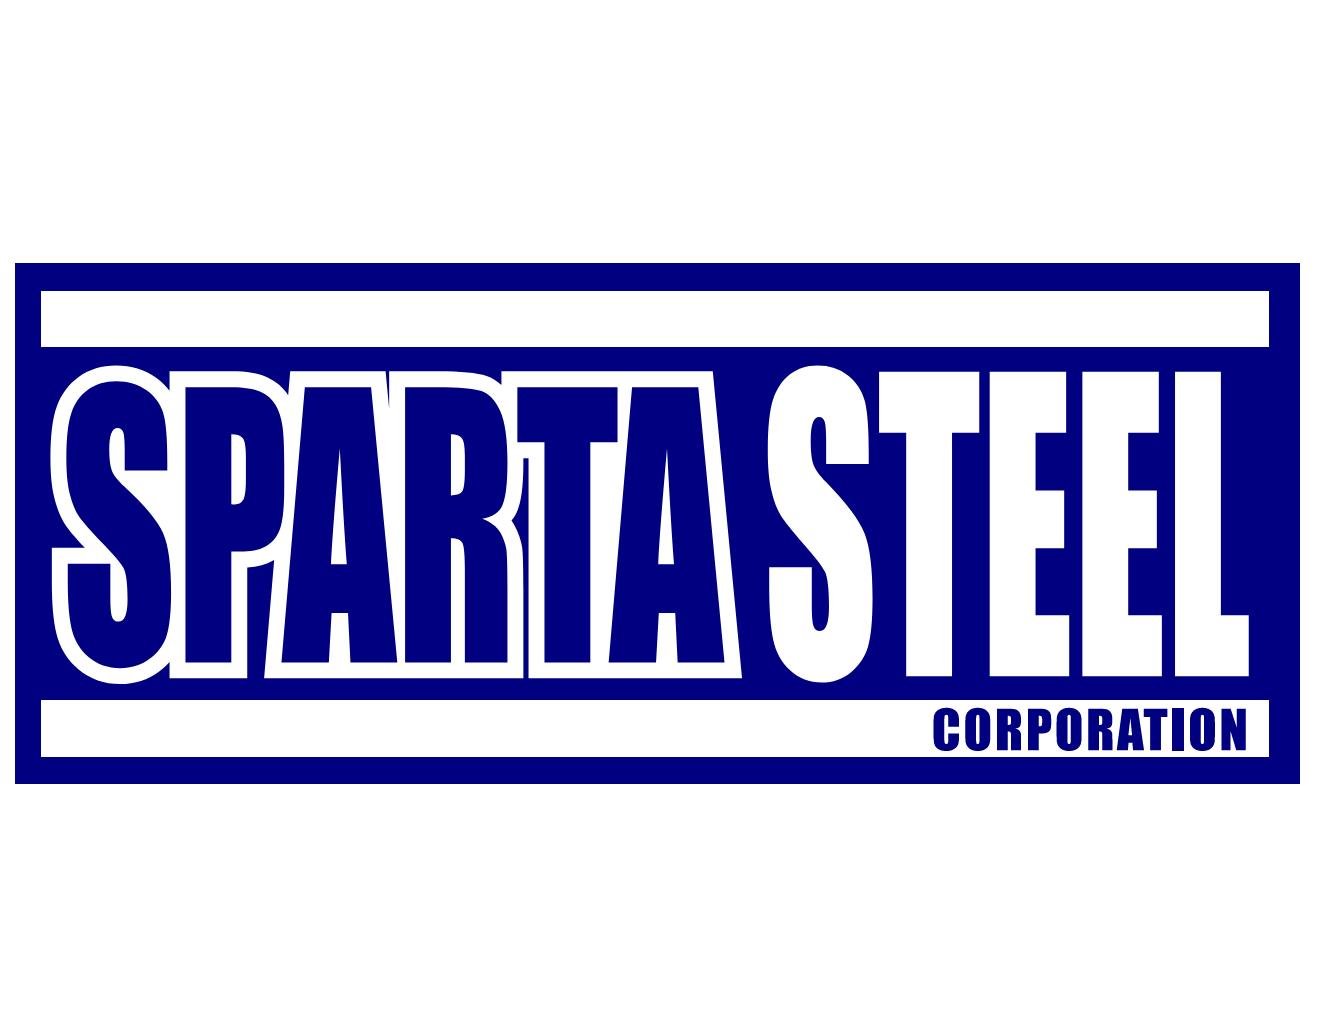 Sparta Steel Corporation